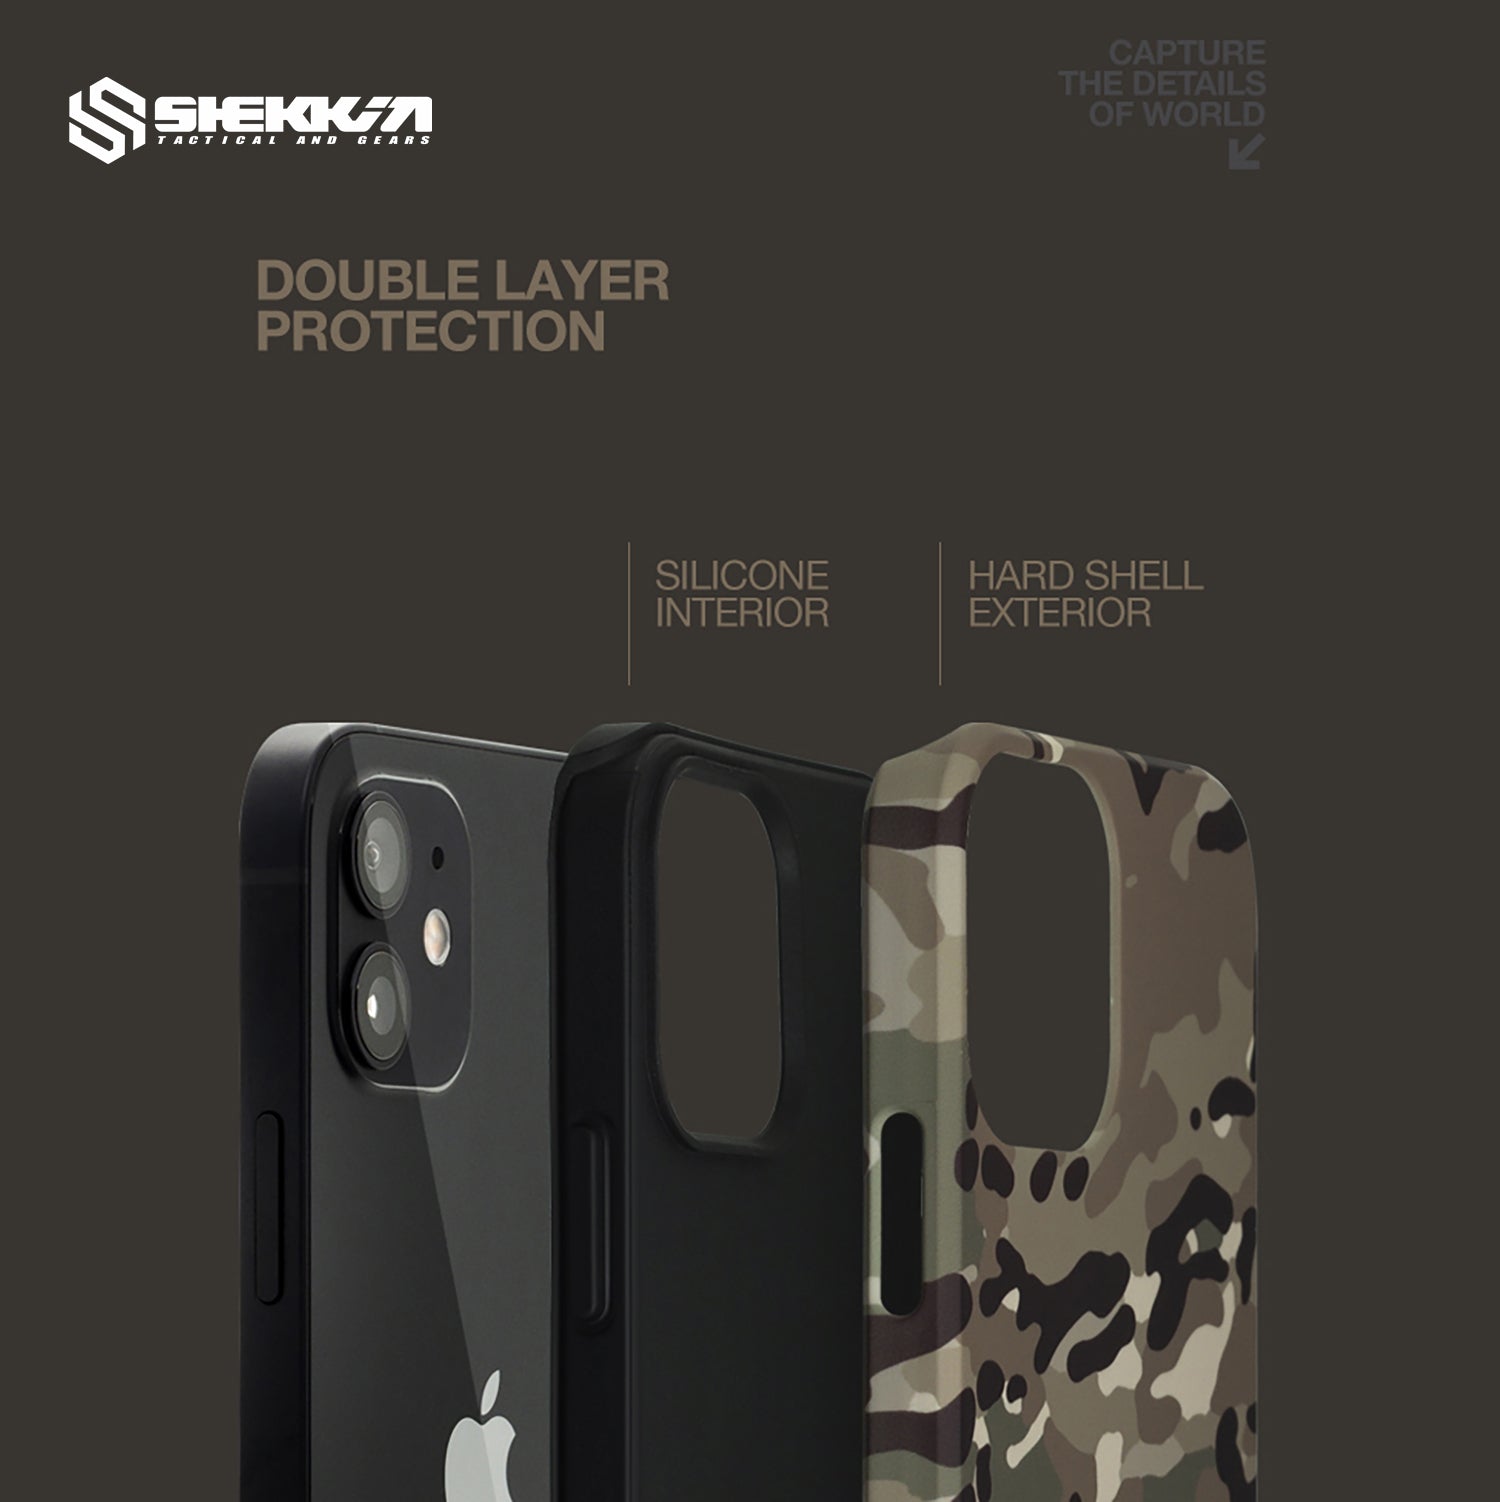 Shekkin Gears x 42nd street IPHONE ultra slim phone case